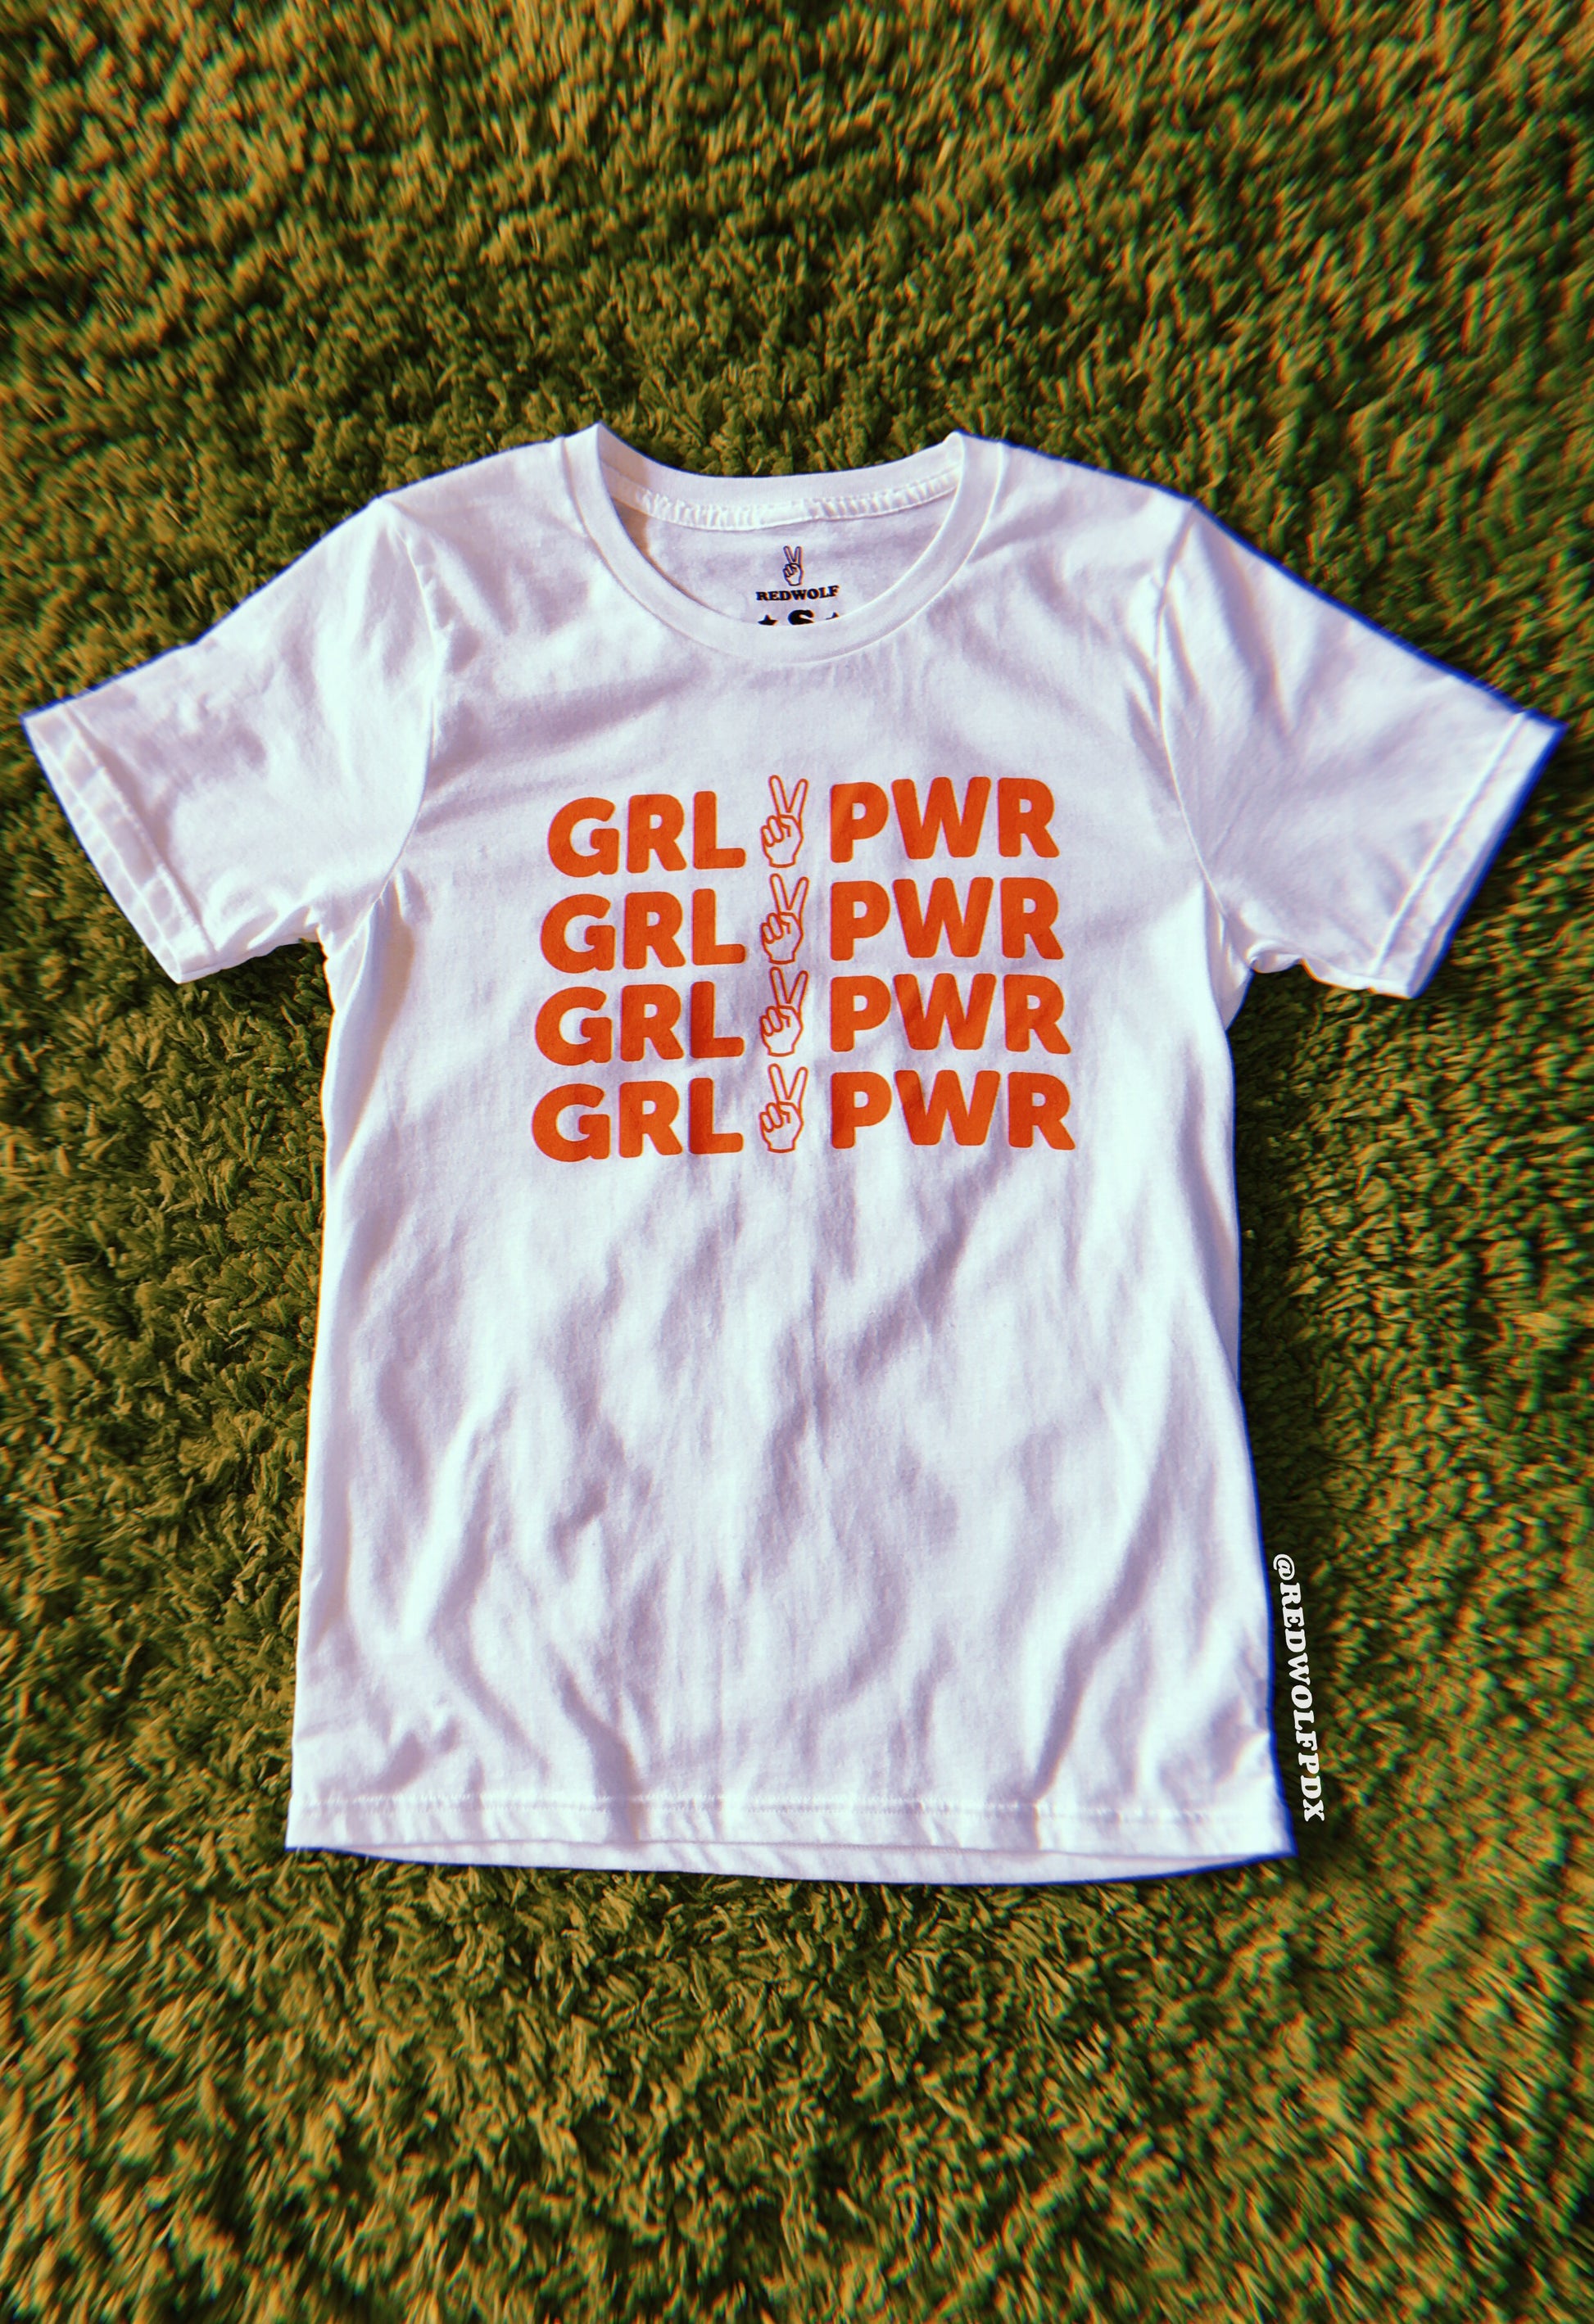   - Girl Power Tee - REDWOLF